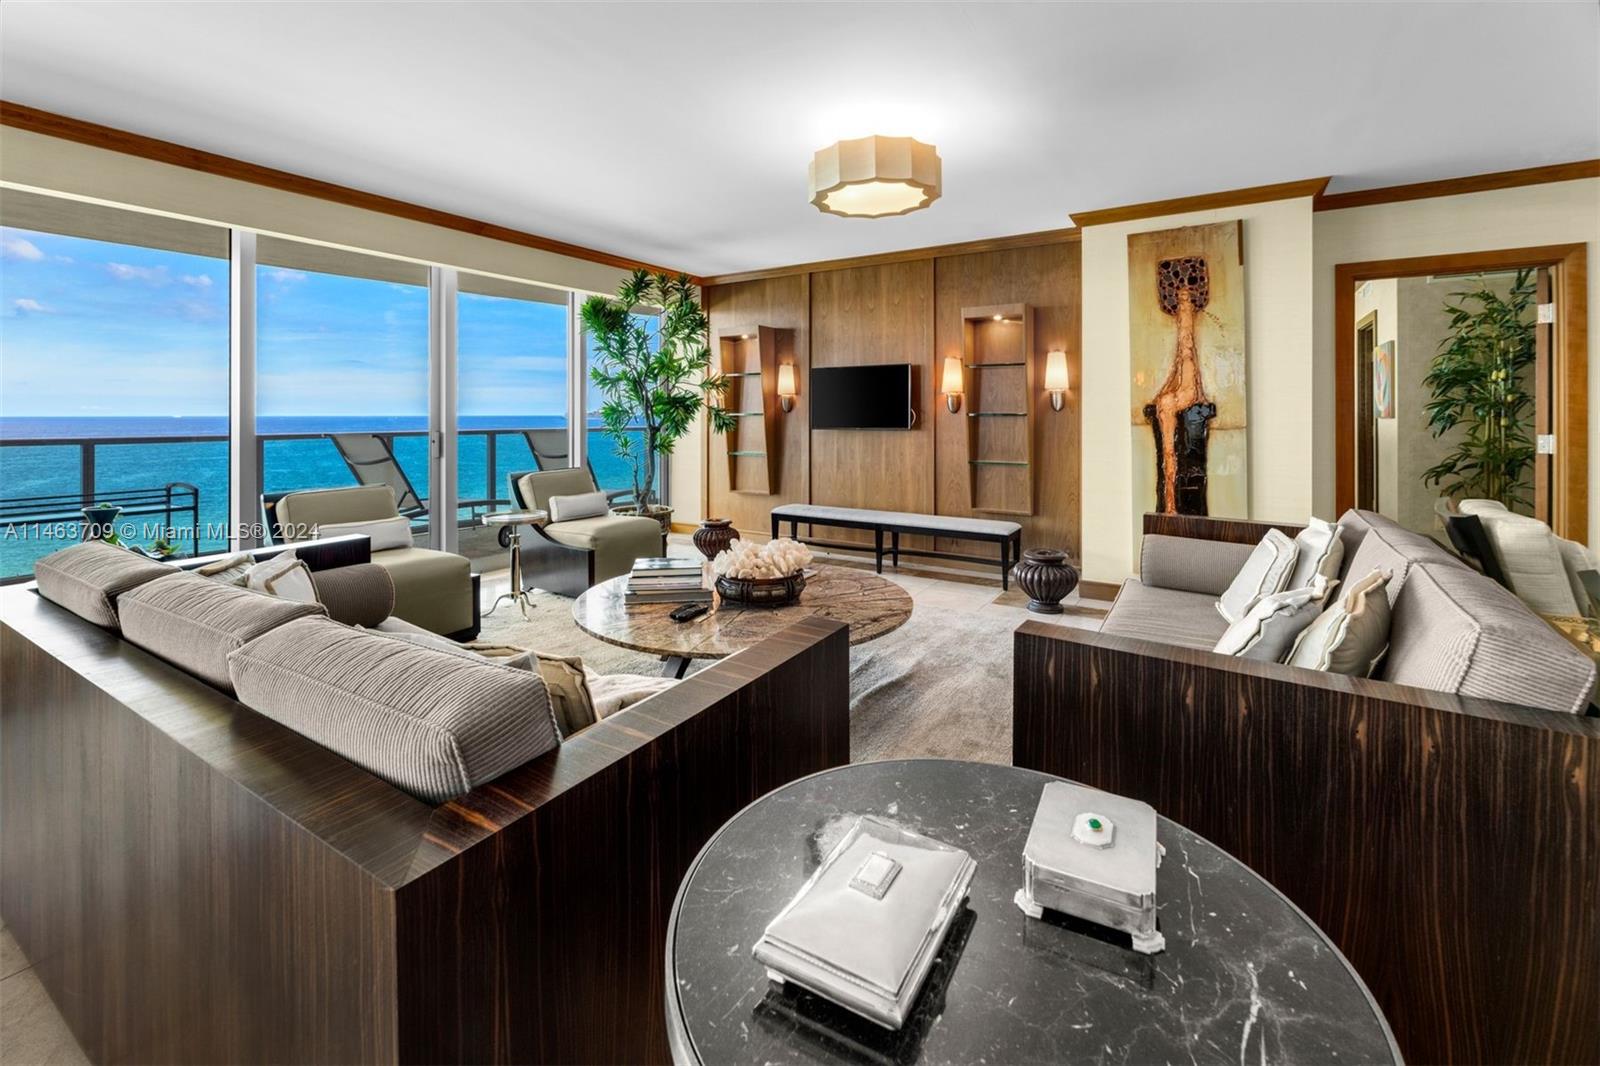 Property for Sale at 1455 Ocean Dr 1408, Miami Beach, Miami-Dade County, Florida - Bedrooms: 3 
Bathrooms: 4  - $5,995,000